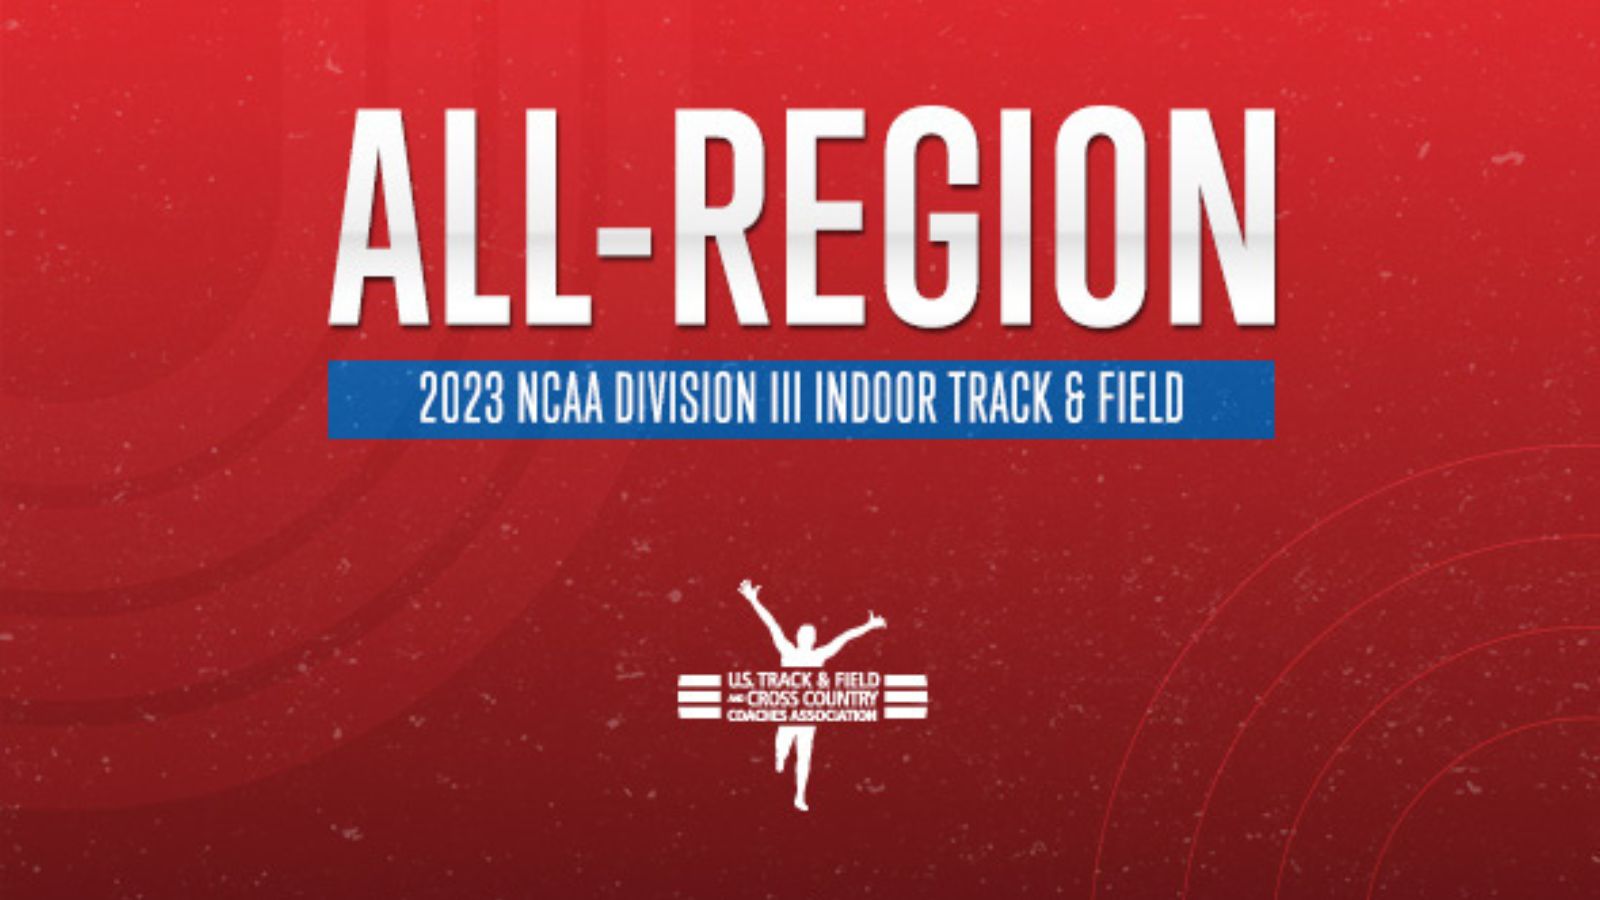 TK Berhe, Zachary Reid And Kenny Davis Receive 2023 Indoor Track & Field All-Region Honors